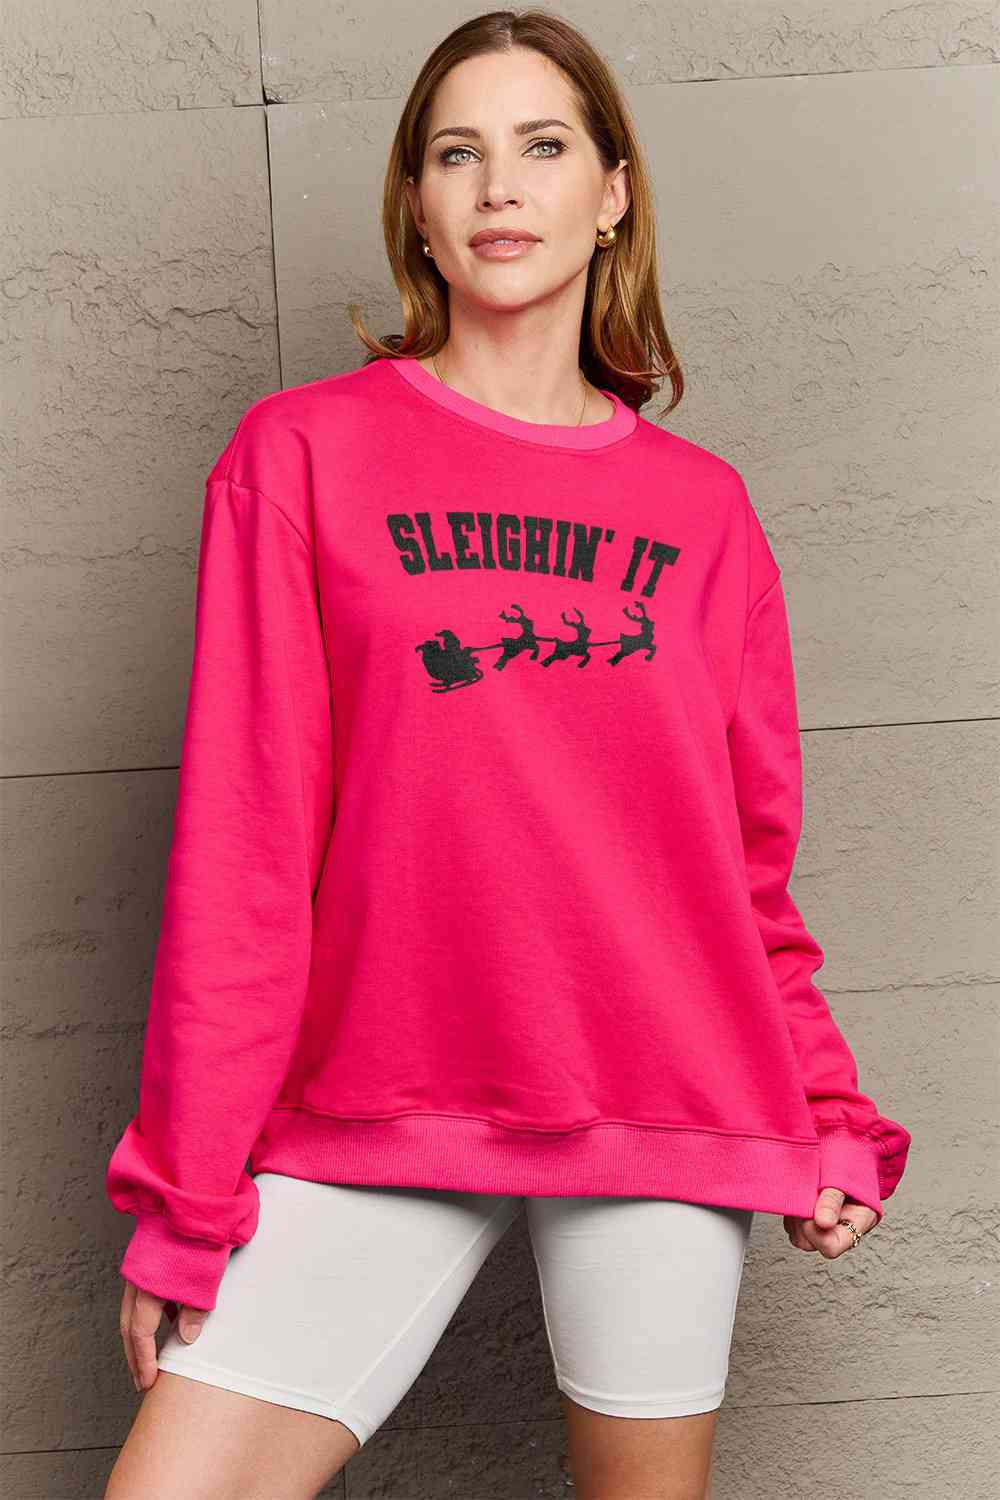 Simply Love Full Size SLEIGHIN' IT Graphic Sweatshirt - Guy Christopher 